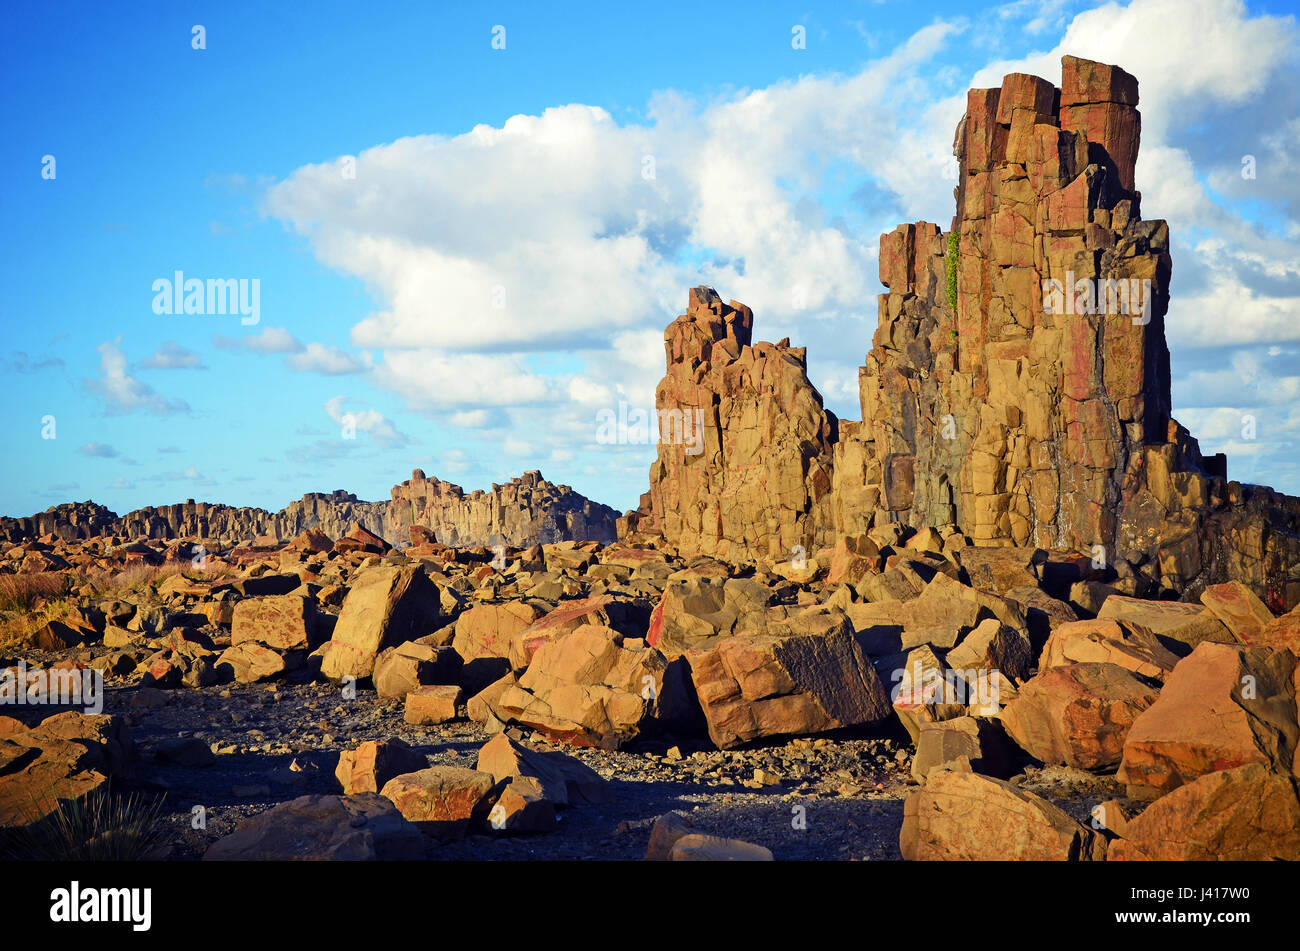 Surreal landscape of basalt rock formations at Bombo Headland quarry, New South Wales coast, Australia Stock Photo